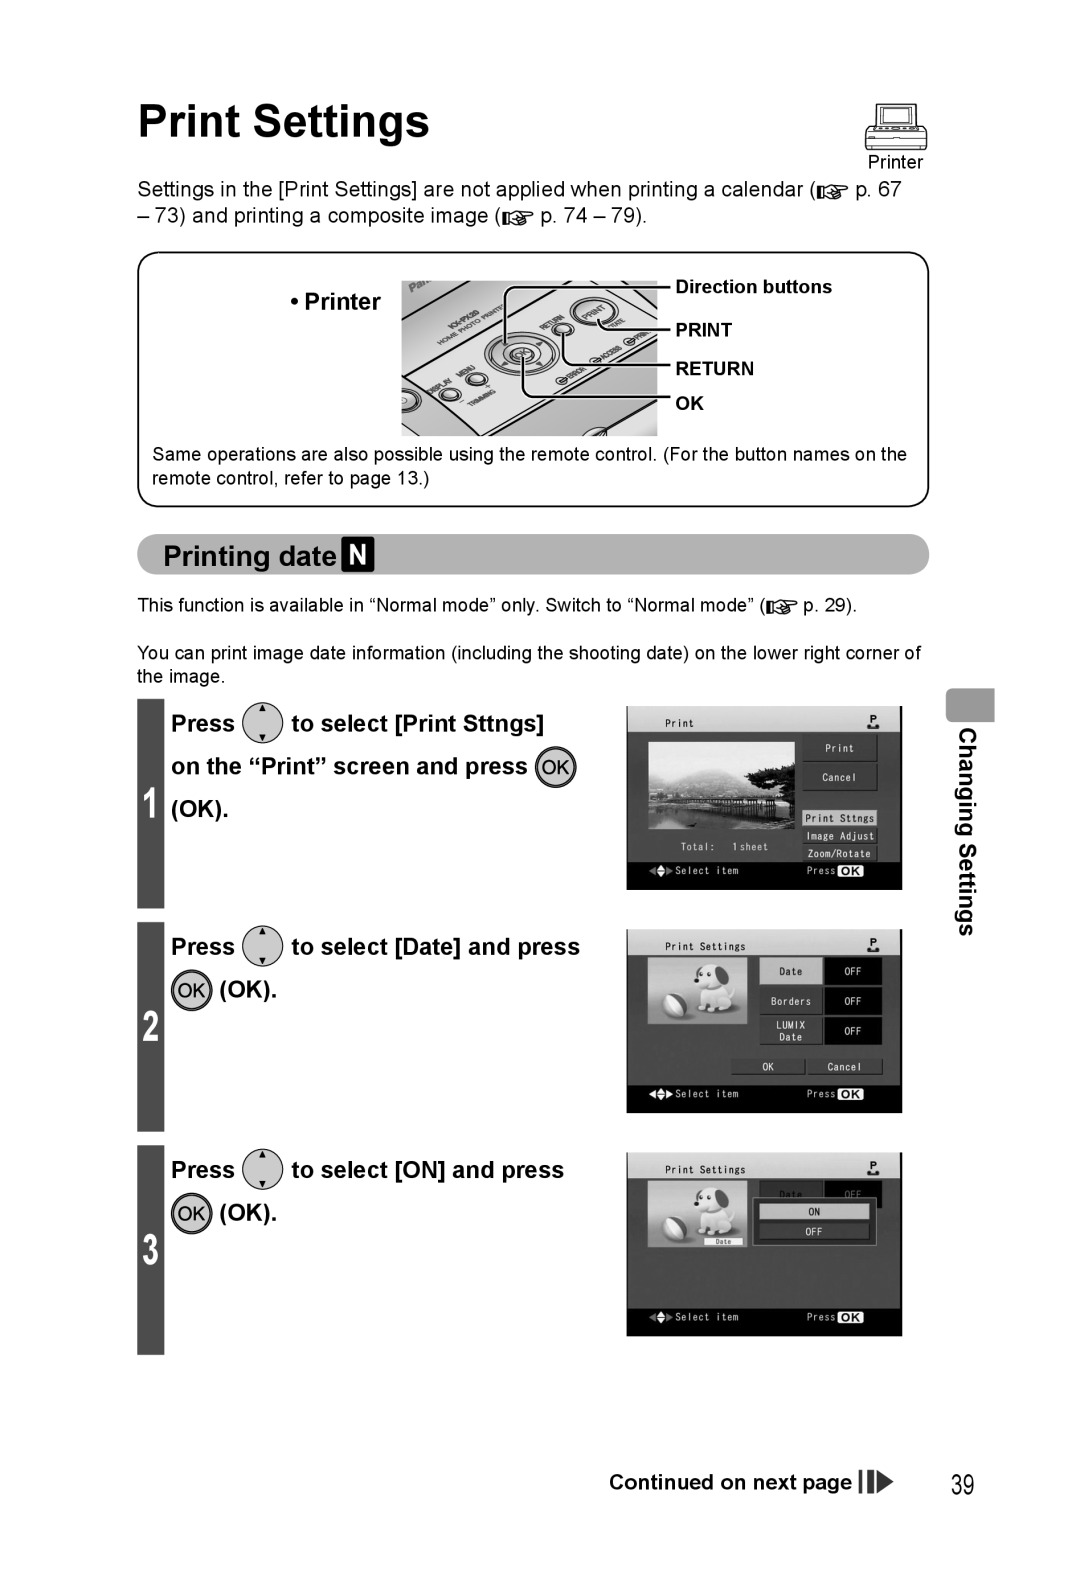 Panasonic KX-PX20M Print Settings, Printing date, Press to select Print Sttngs on the “Print” screen and press 1 OK 